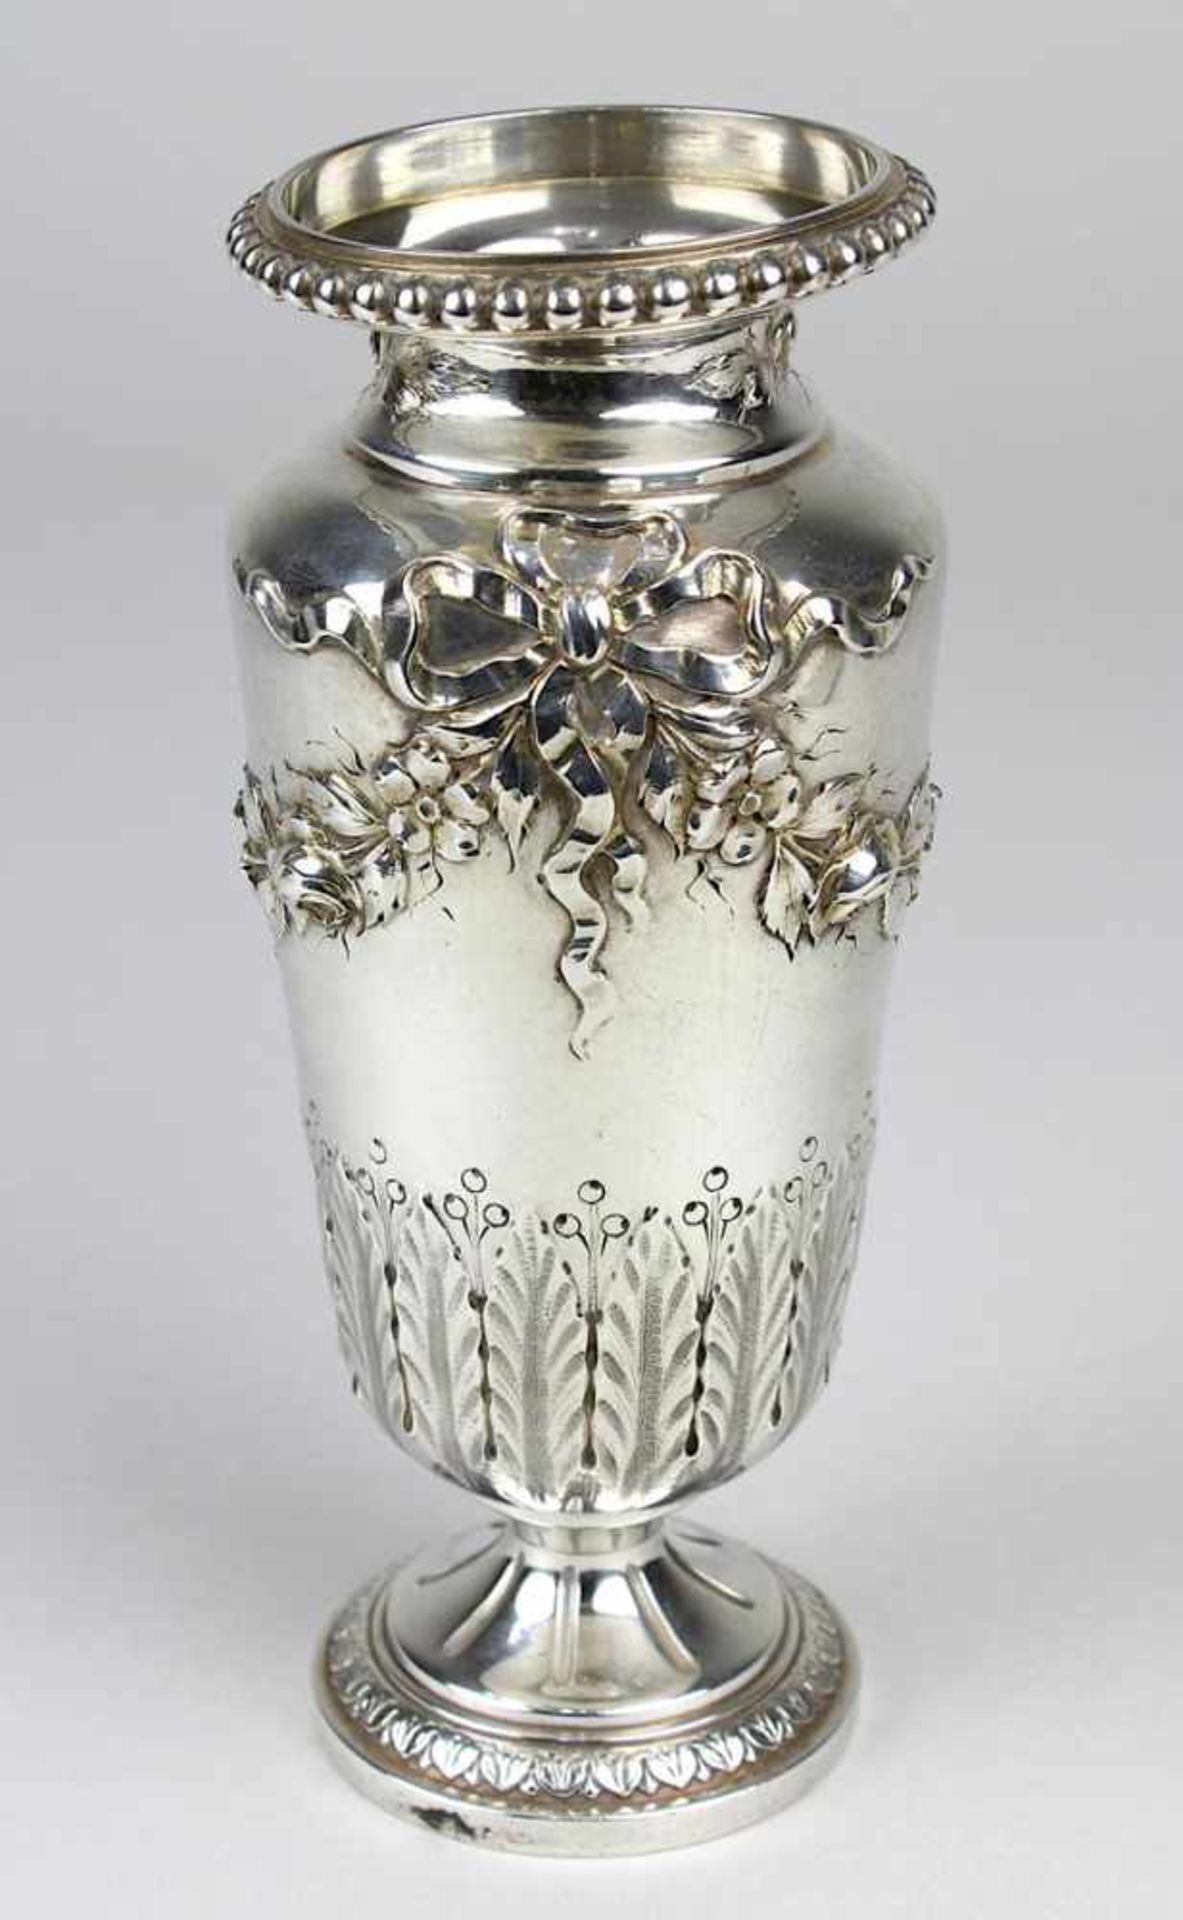 A m. Tallois Orfevre - Silbervase, Paris um 1880, amphorenförmige Vase aus 950er Silber, Wandung mit